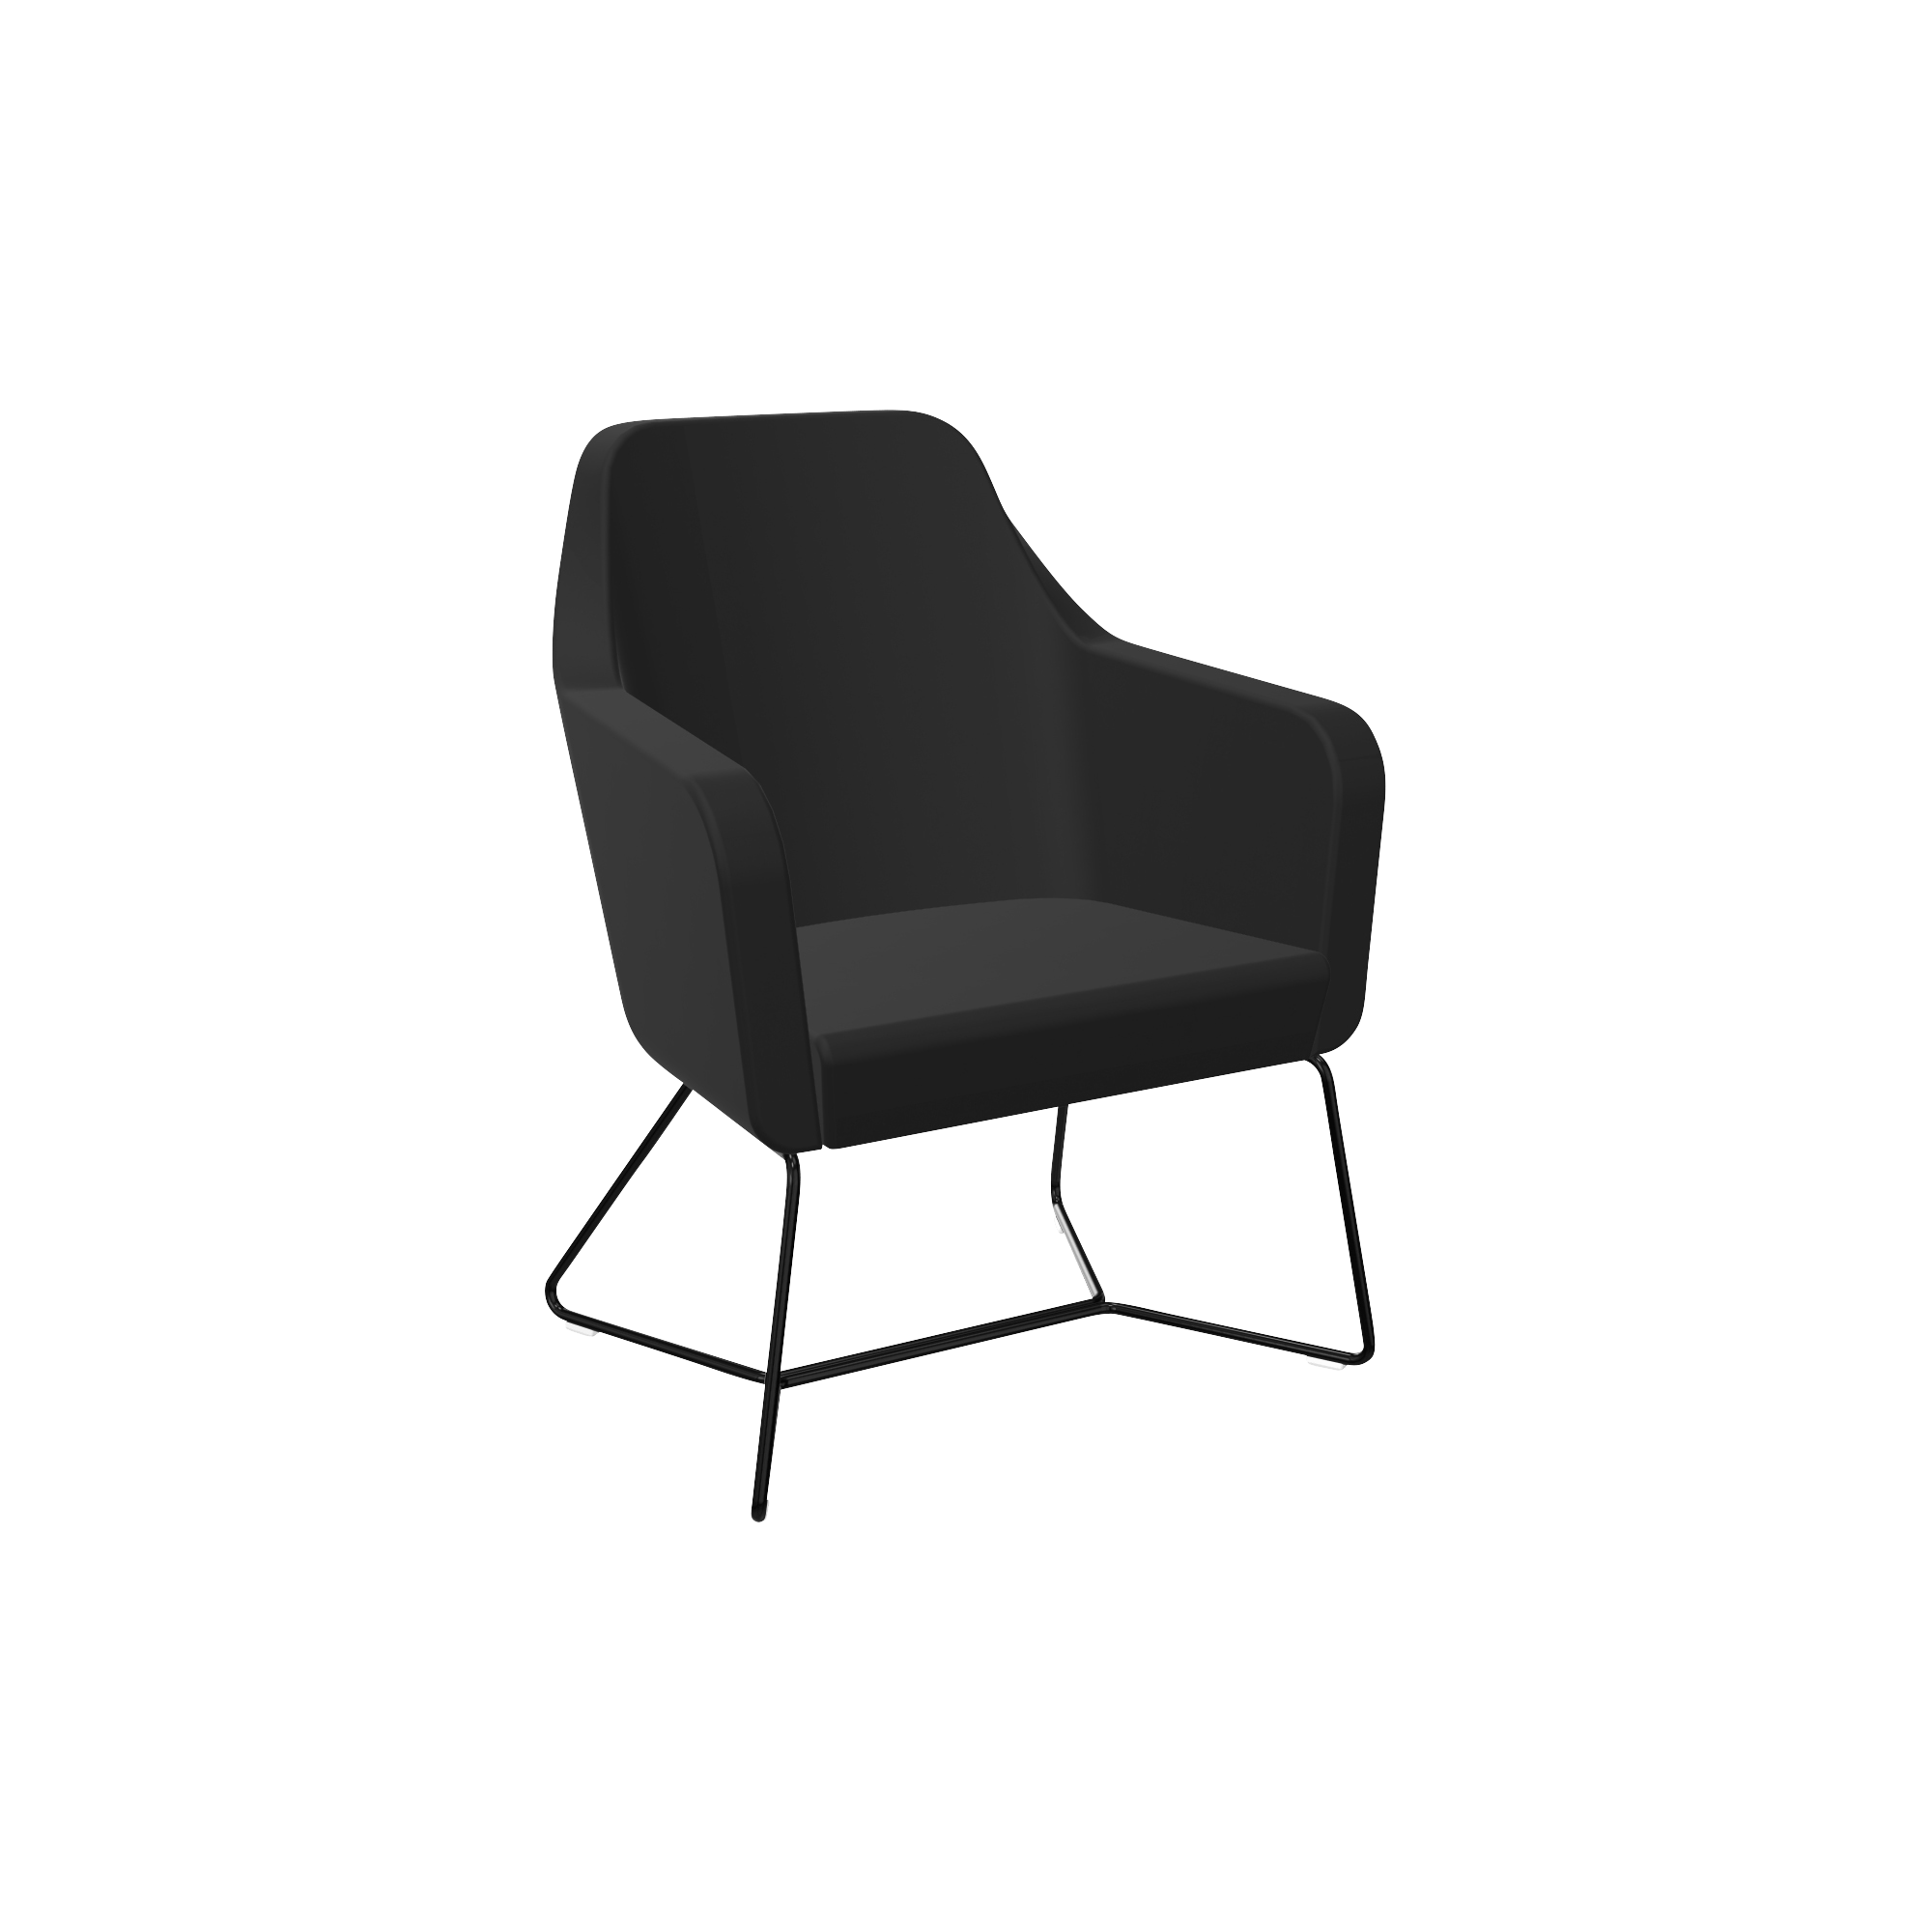 Black upholstered seat with single black leg